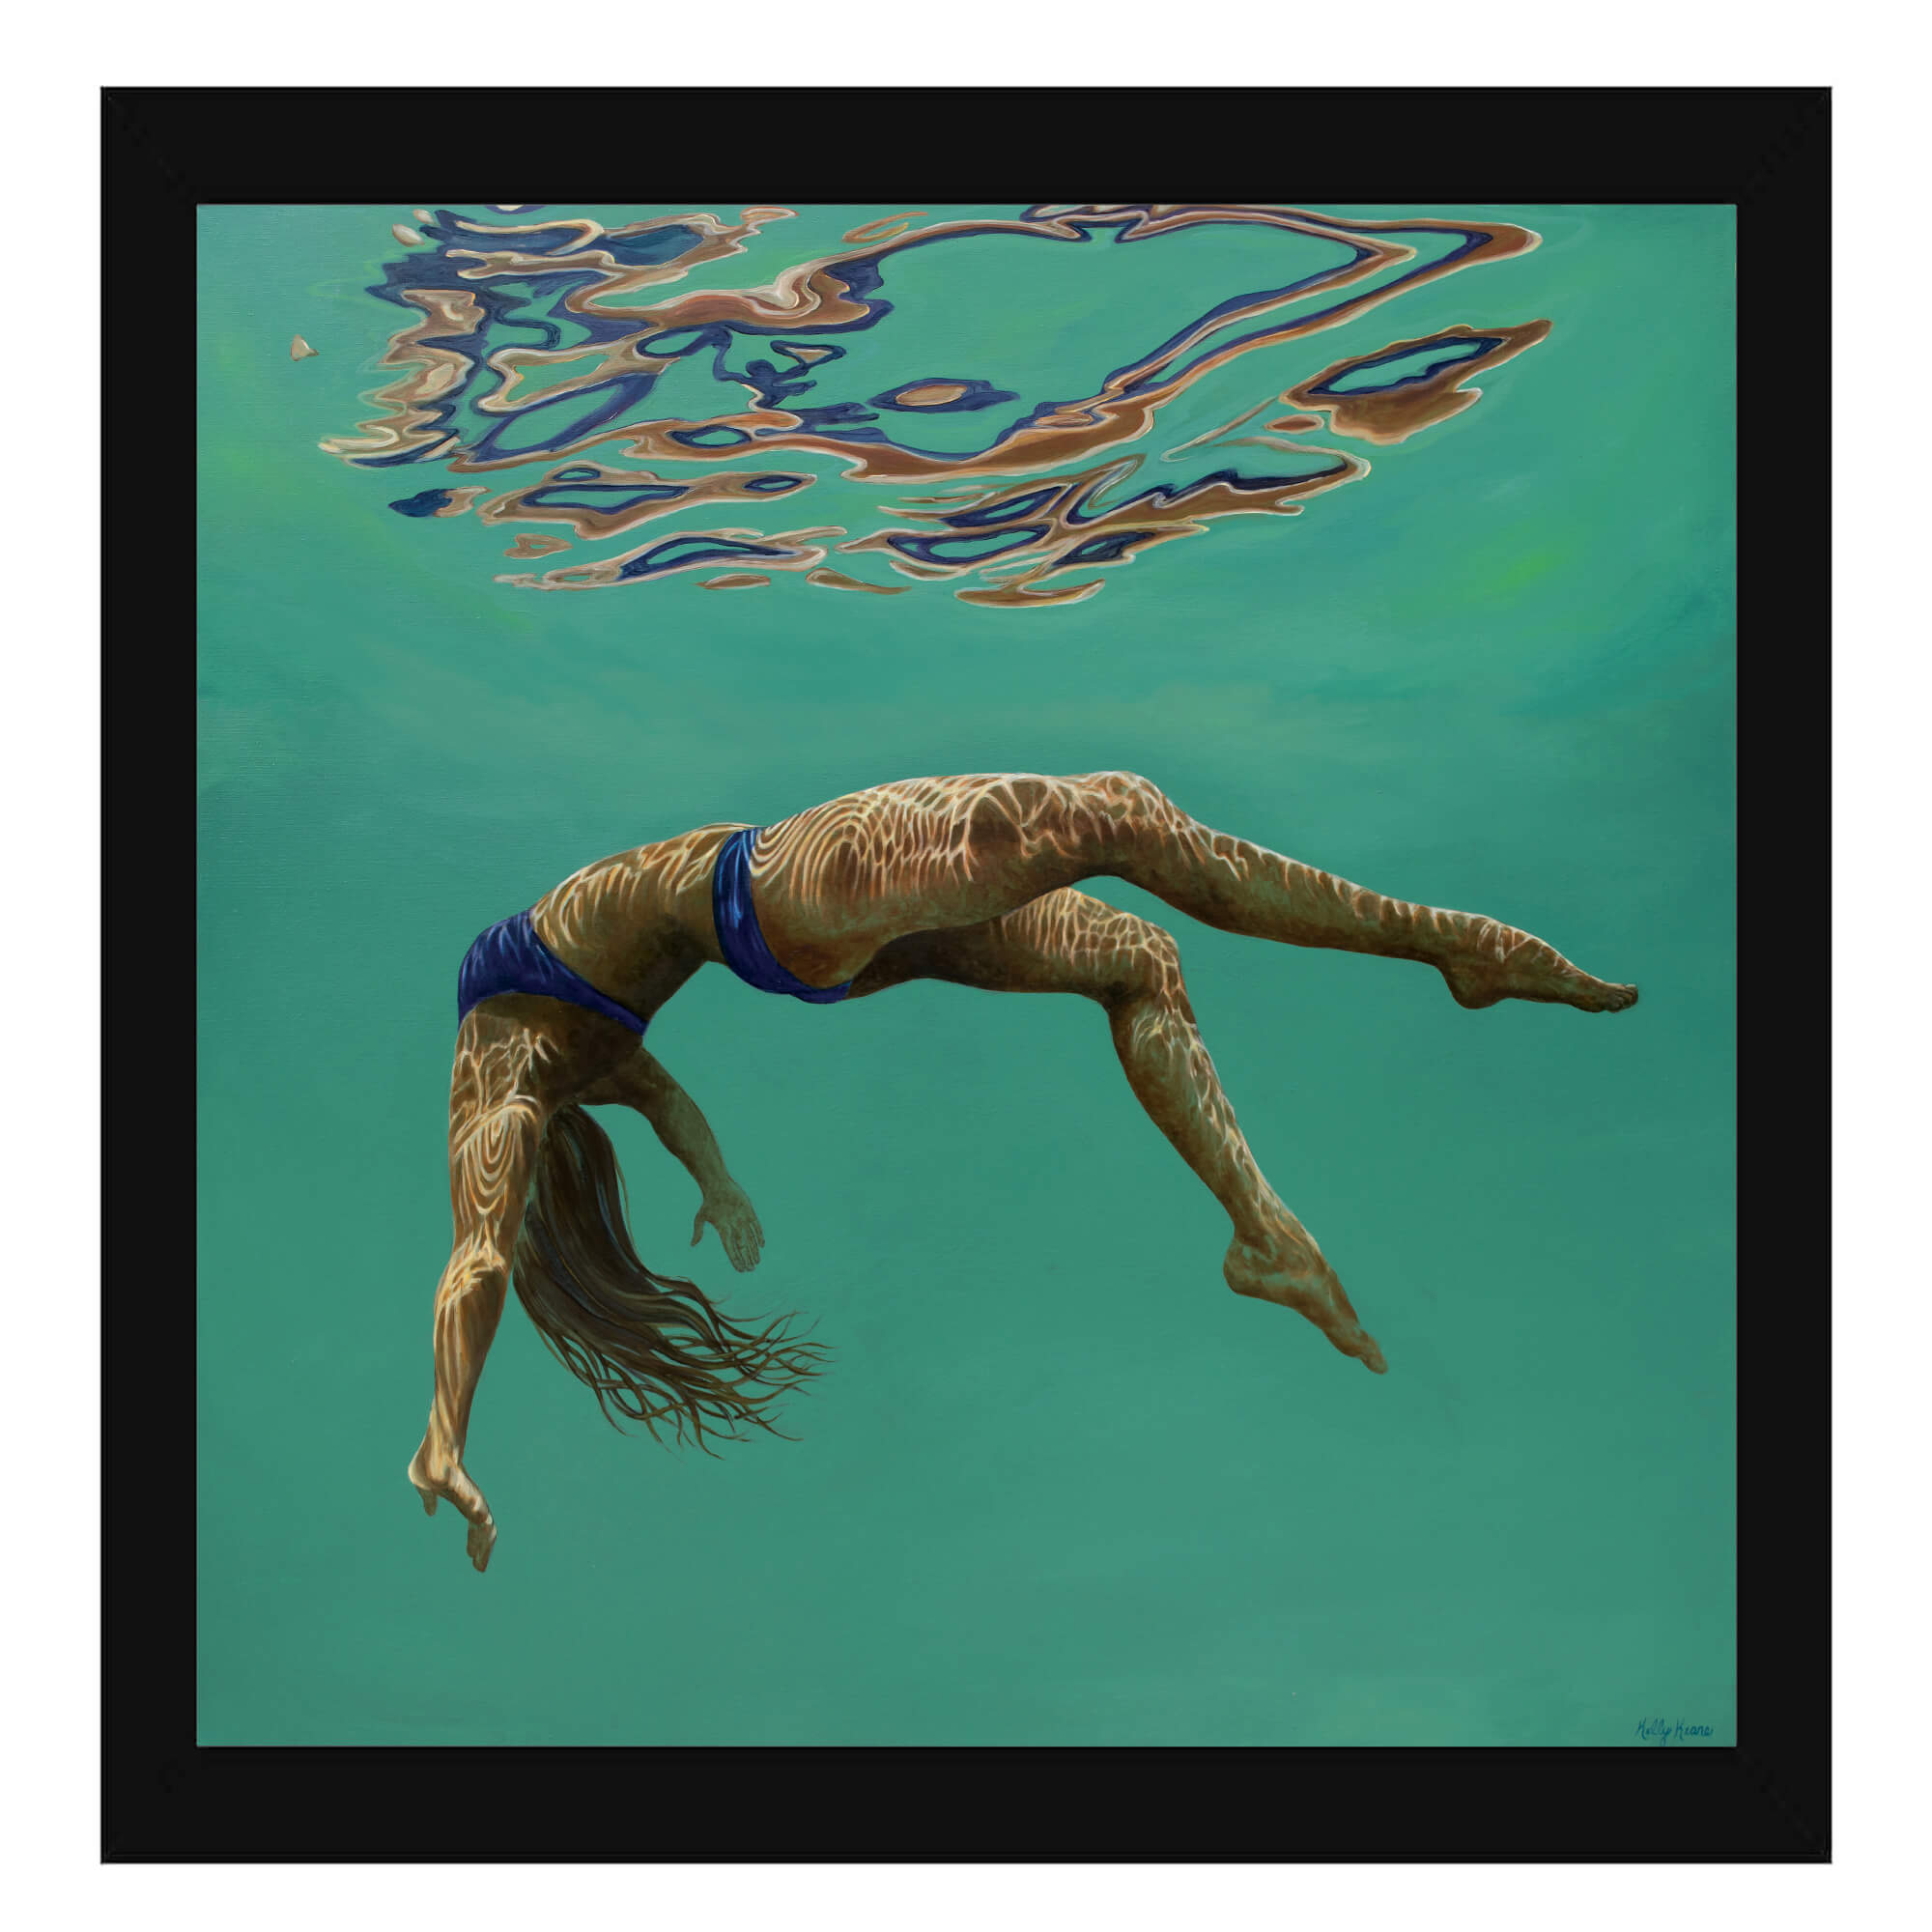 Paper art print of a woman enjoying a peaceful swim underwater by Hawaii artist Kelly Keane